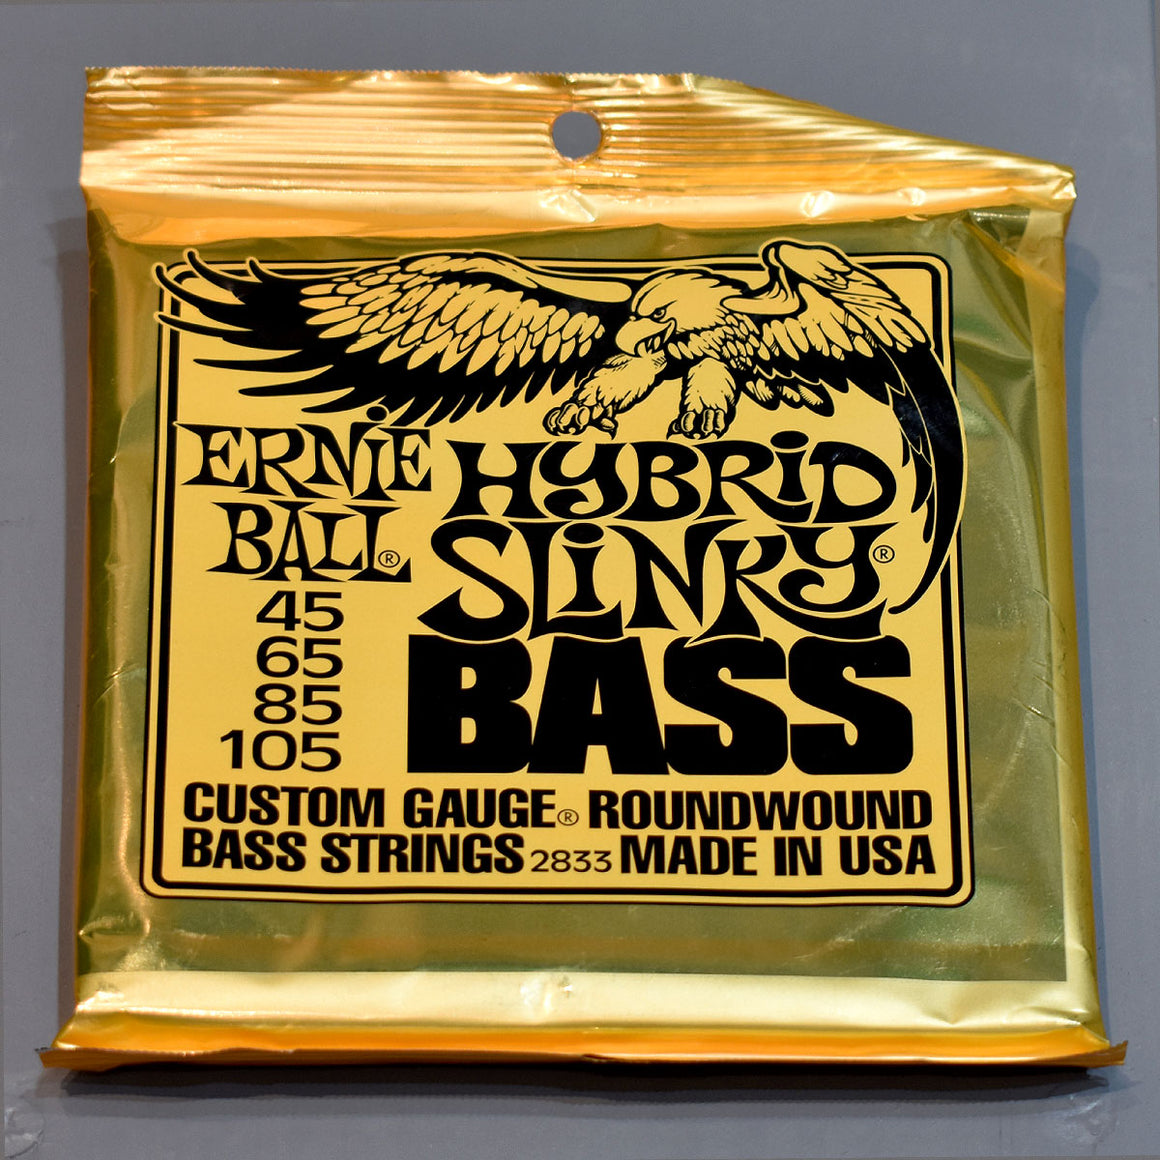 Ernie Ball Hybrid Slinky Bass Nickel Wound Electric Bass Strings - 45-105 Gauge